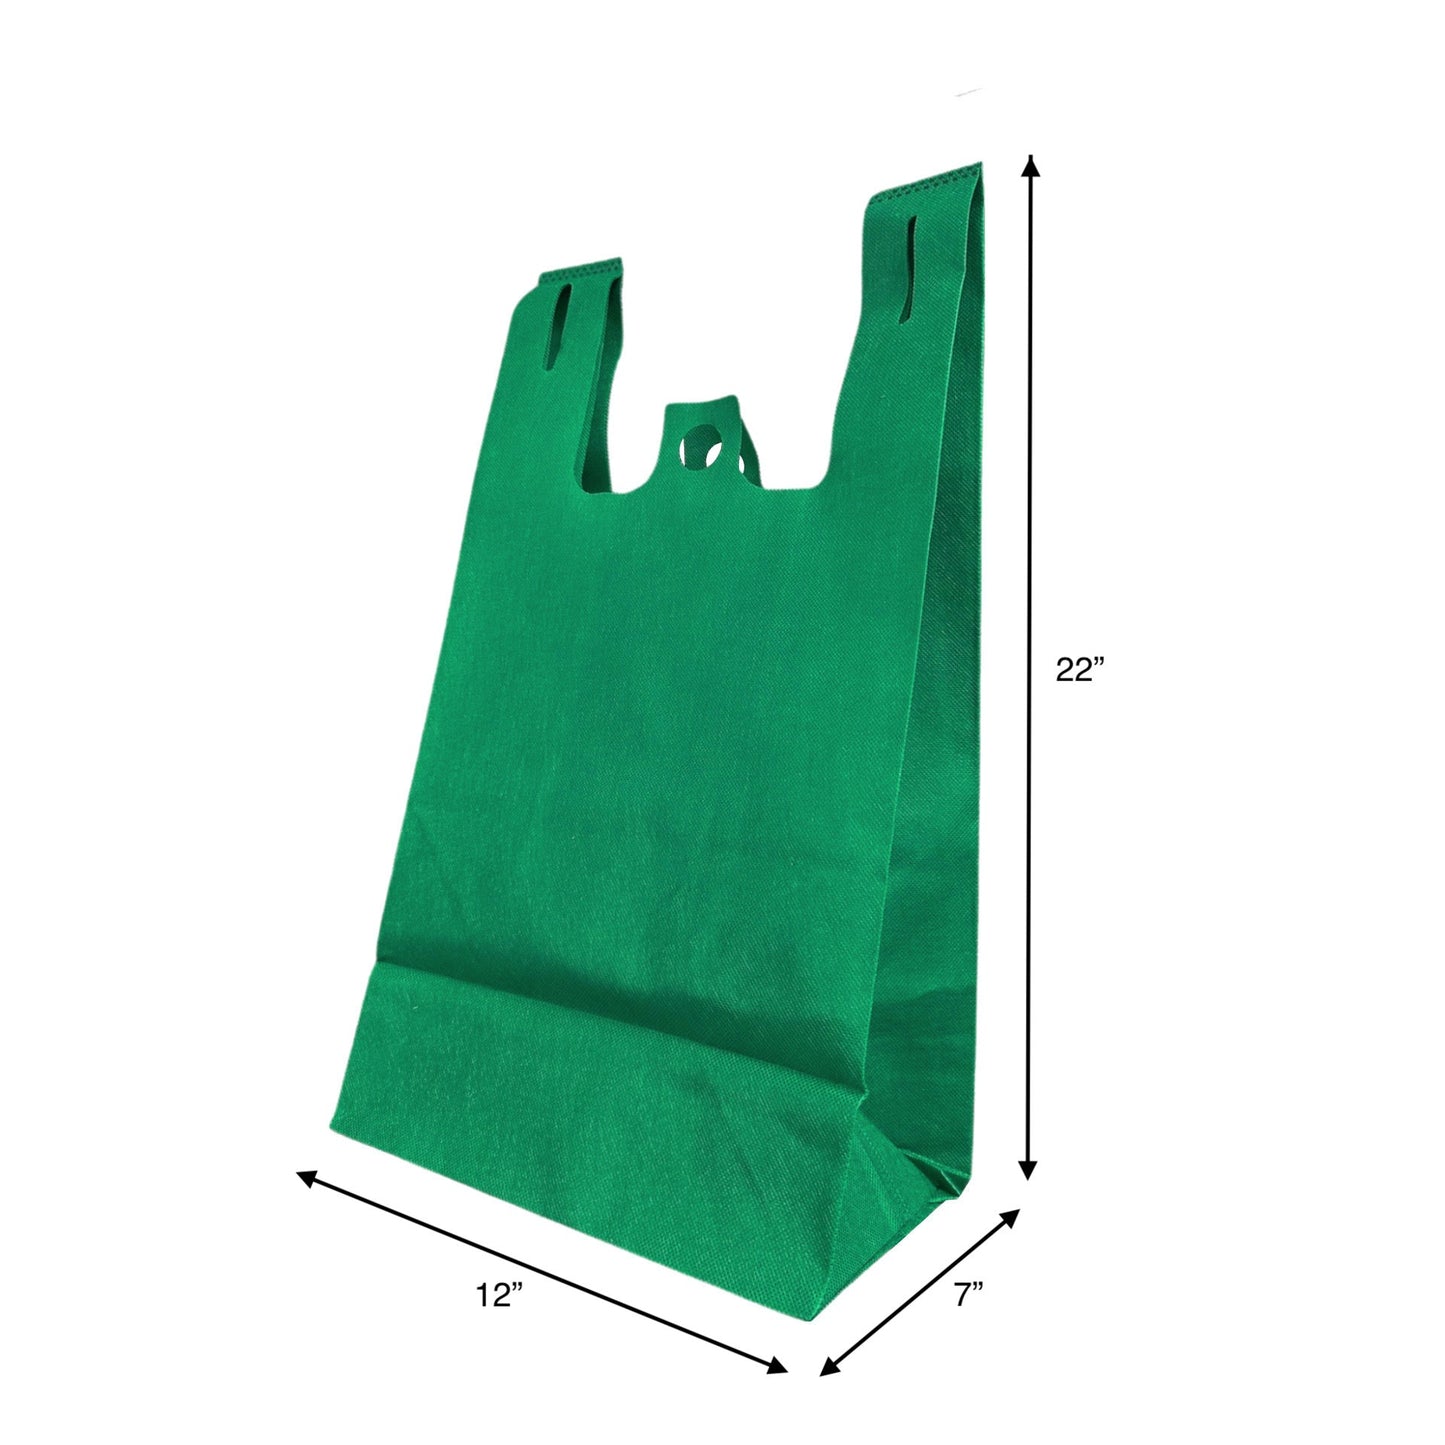 200pcs Non-Woven Reusable T-Shirt Bag 12x7x22x7 inches Dark Green Shopping Bags Square Bottom; $0.44/bag